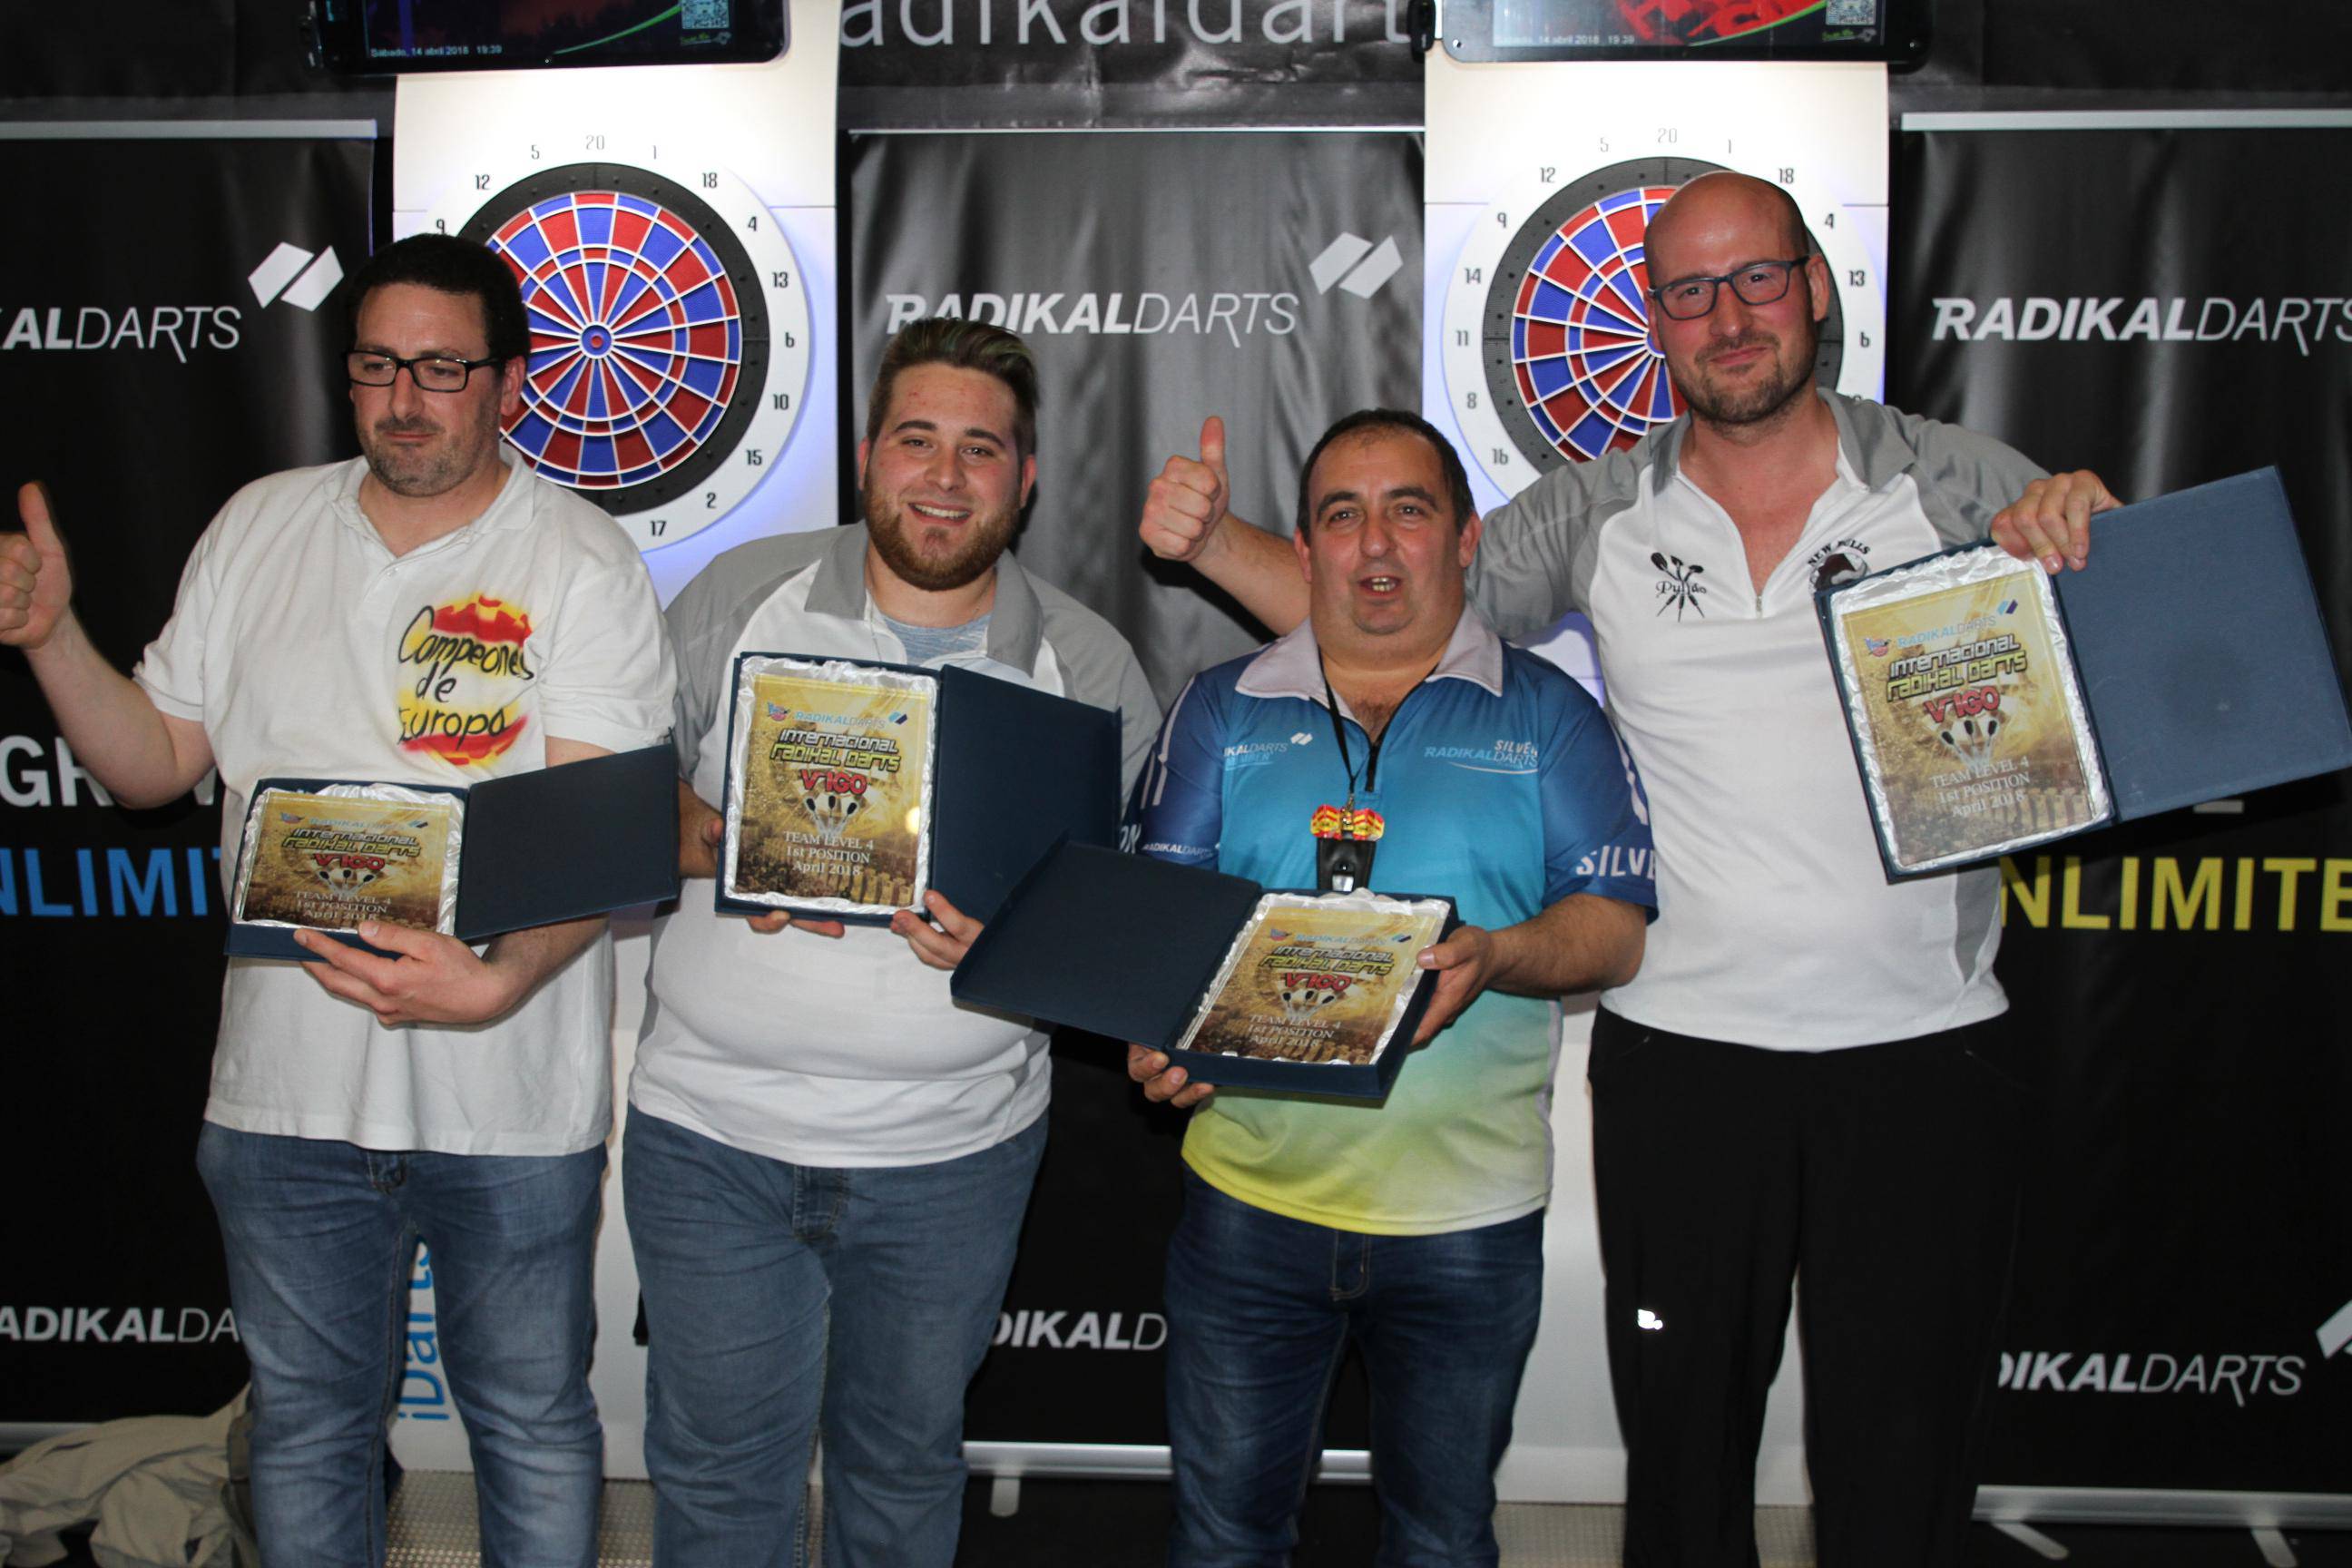 Internacional Radikal Darts Equipos Nivel 4 Campeones Darkman